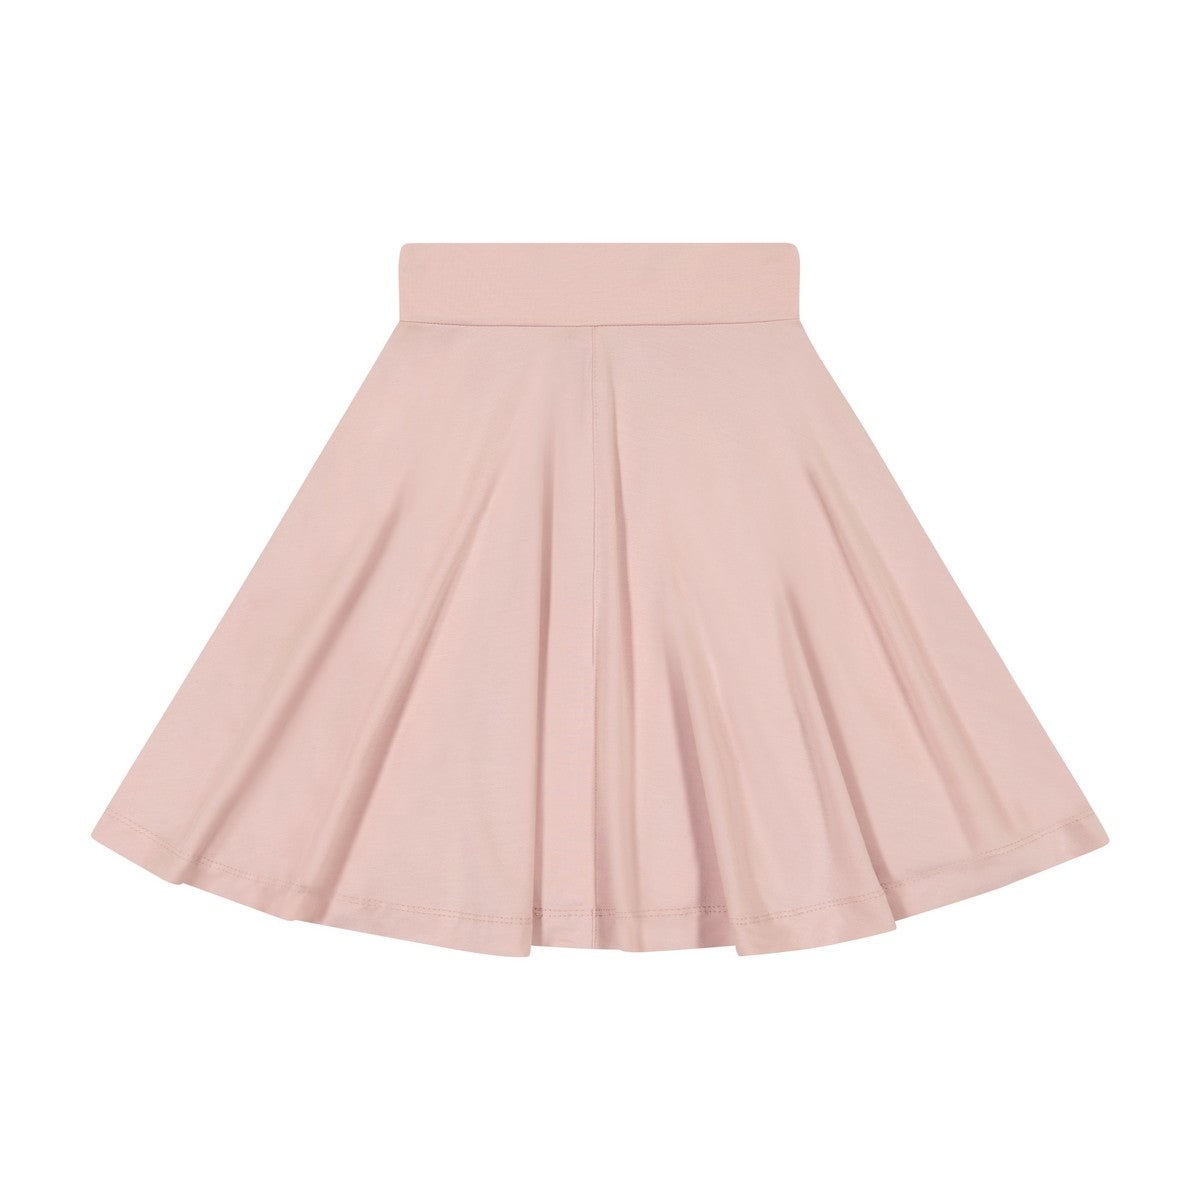 Teela Blush Basic Knit Circle Skirt